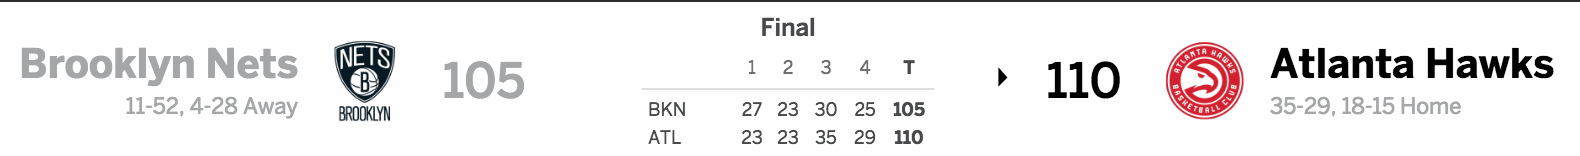 Brooklyn Nets vs Atlanta Hawks 3:8:17 Score